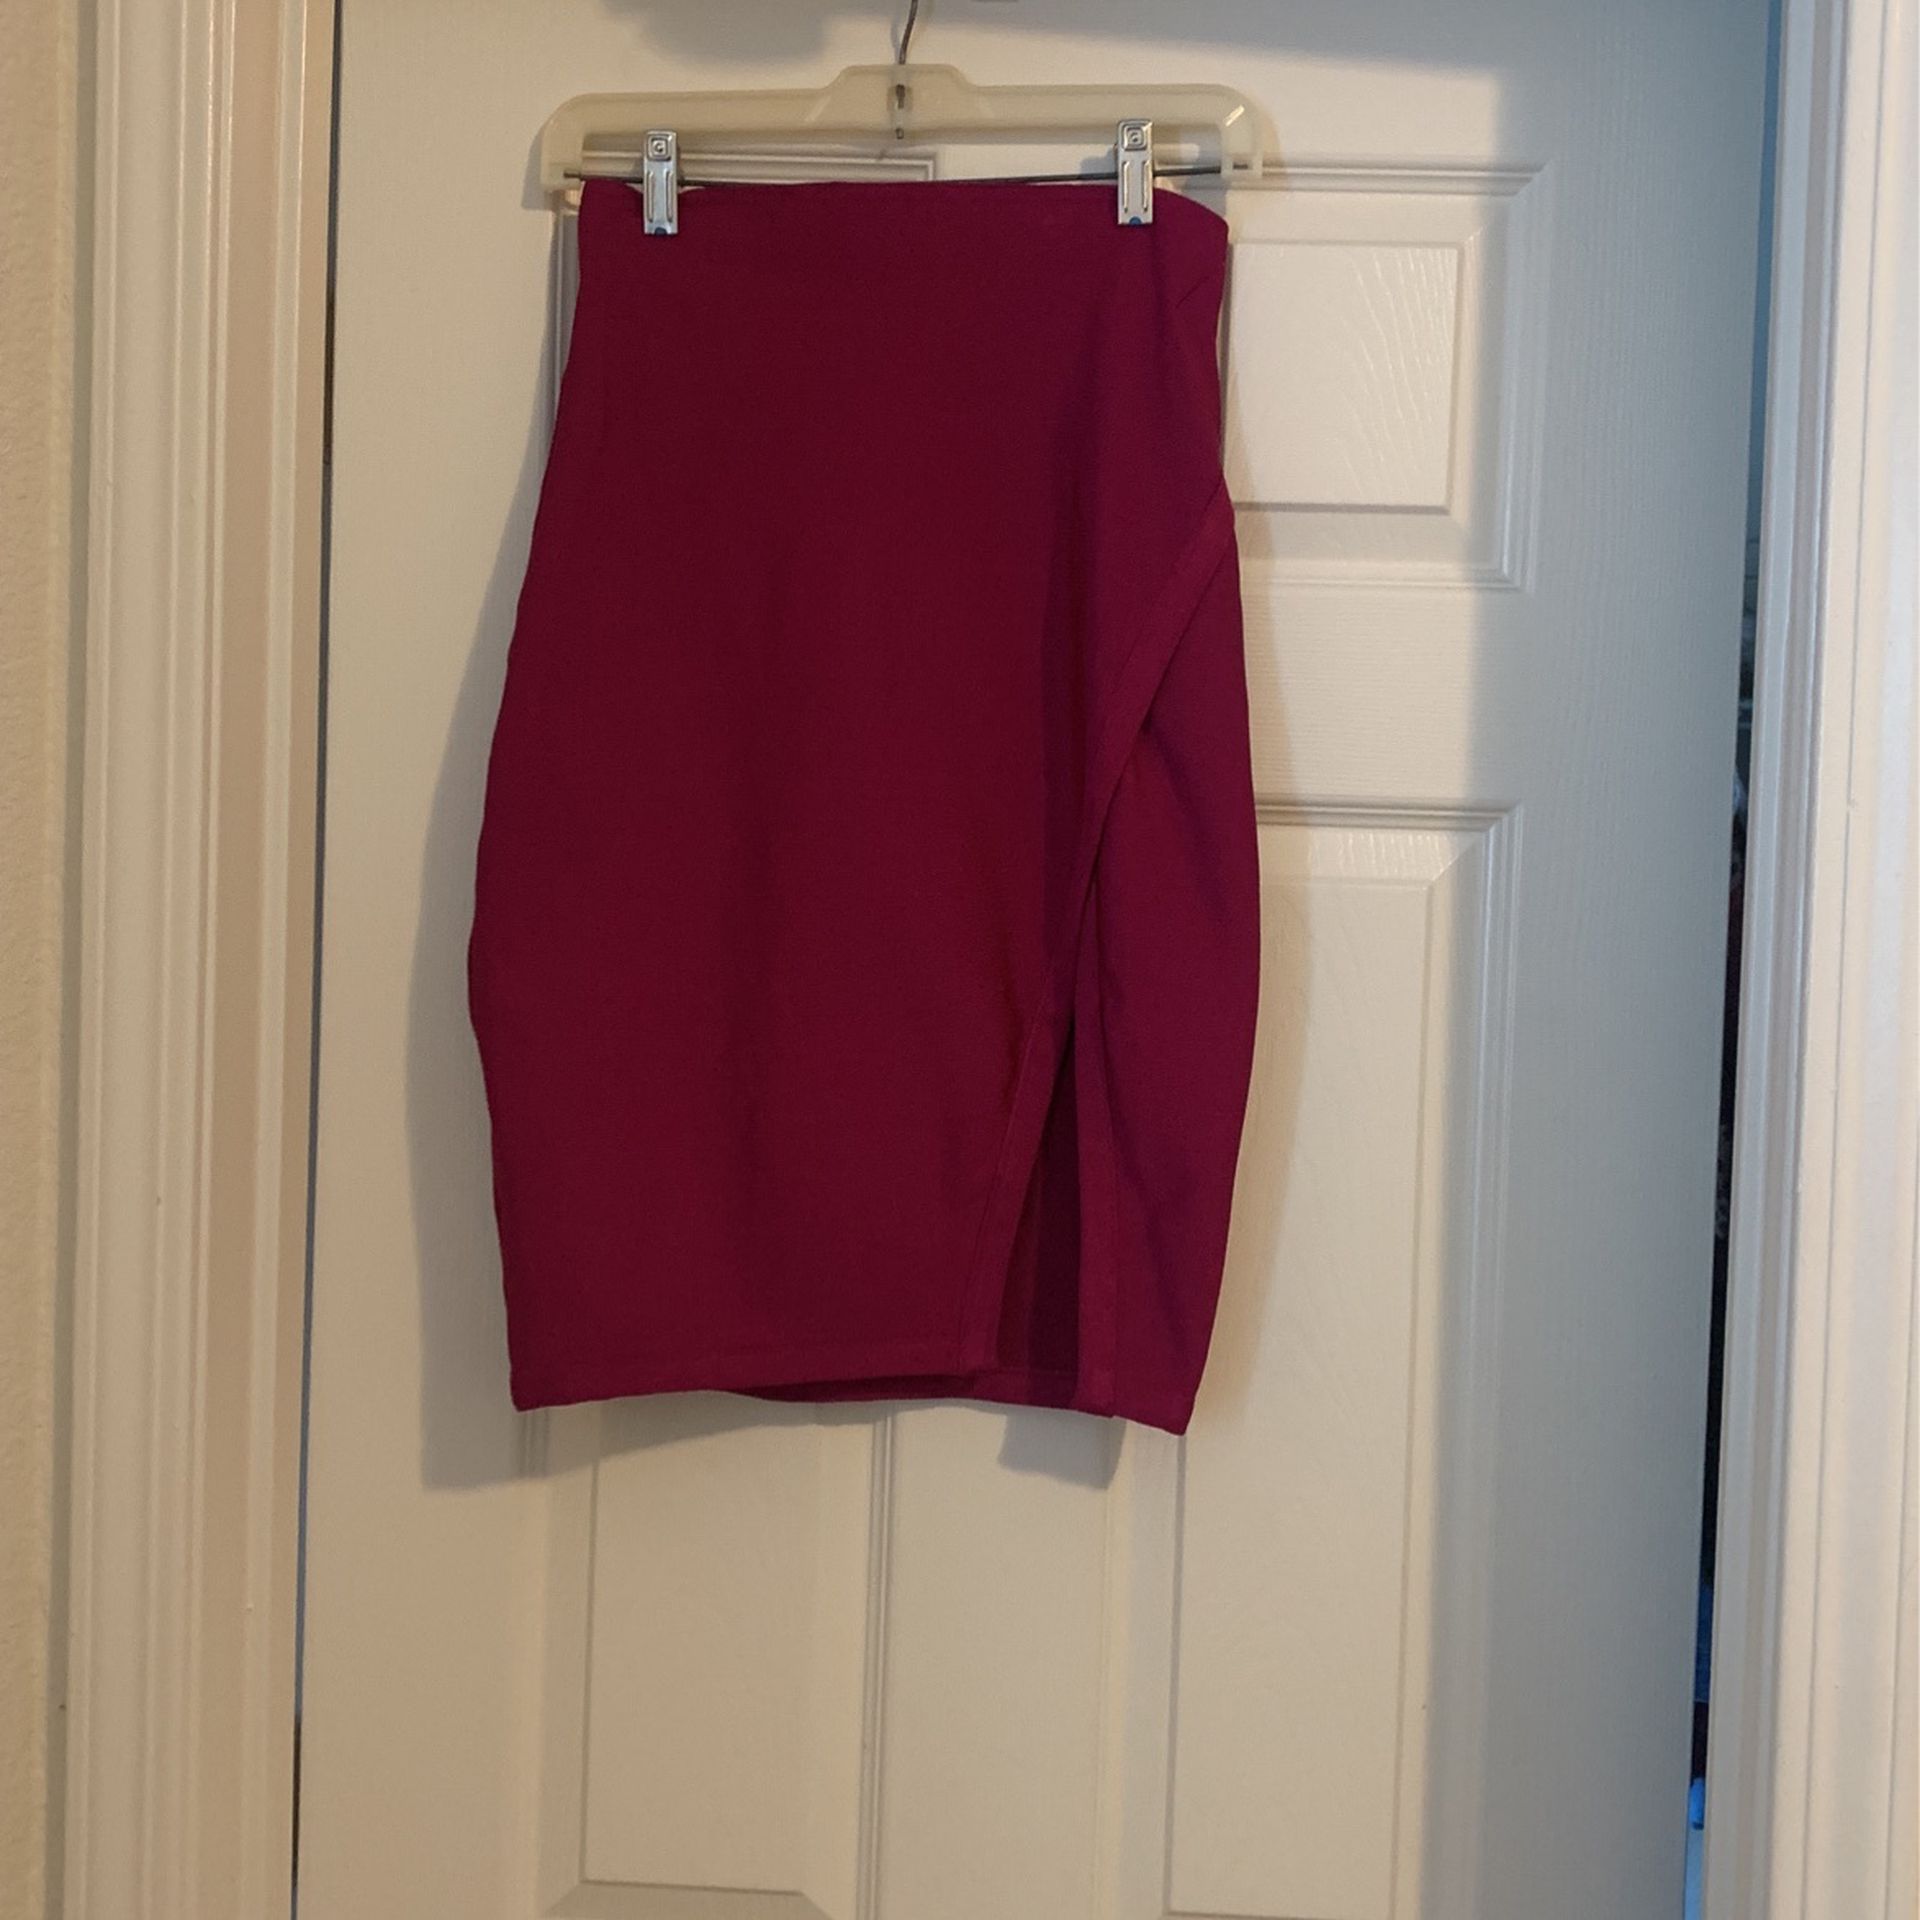 Purple pencil skirt